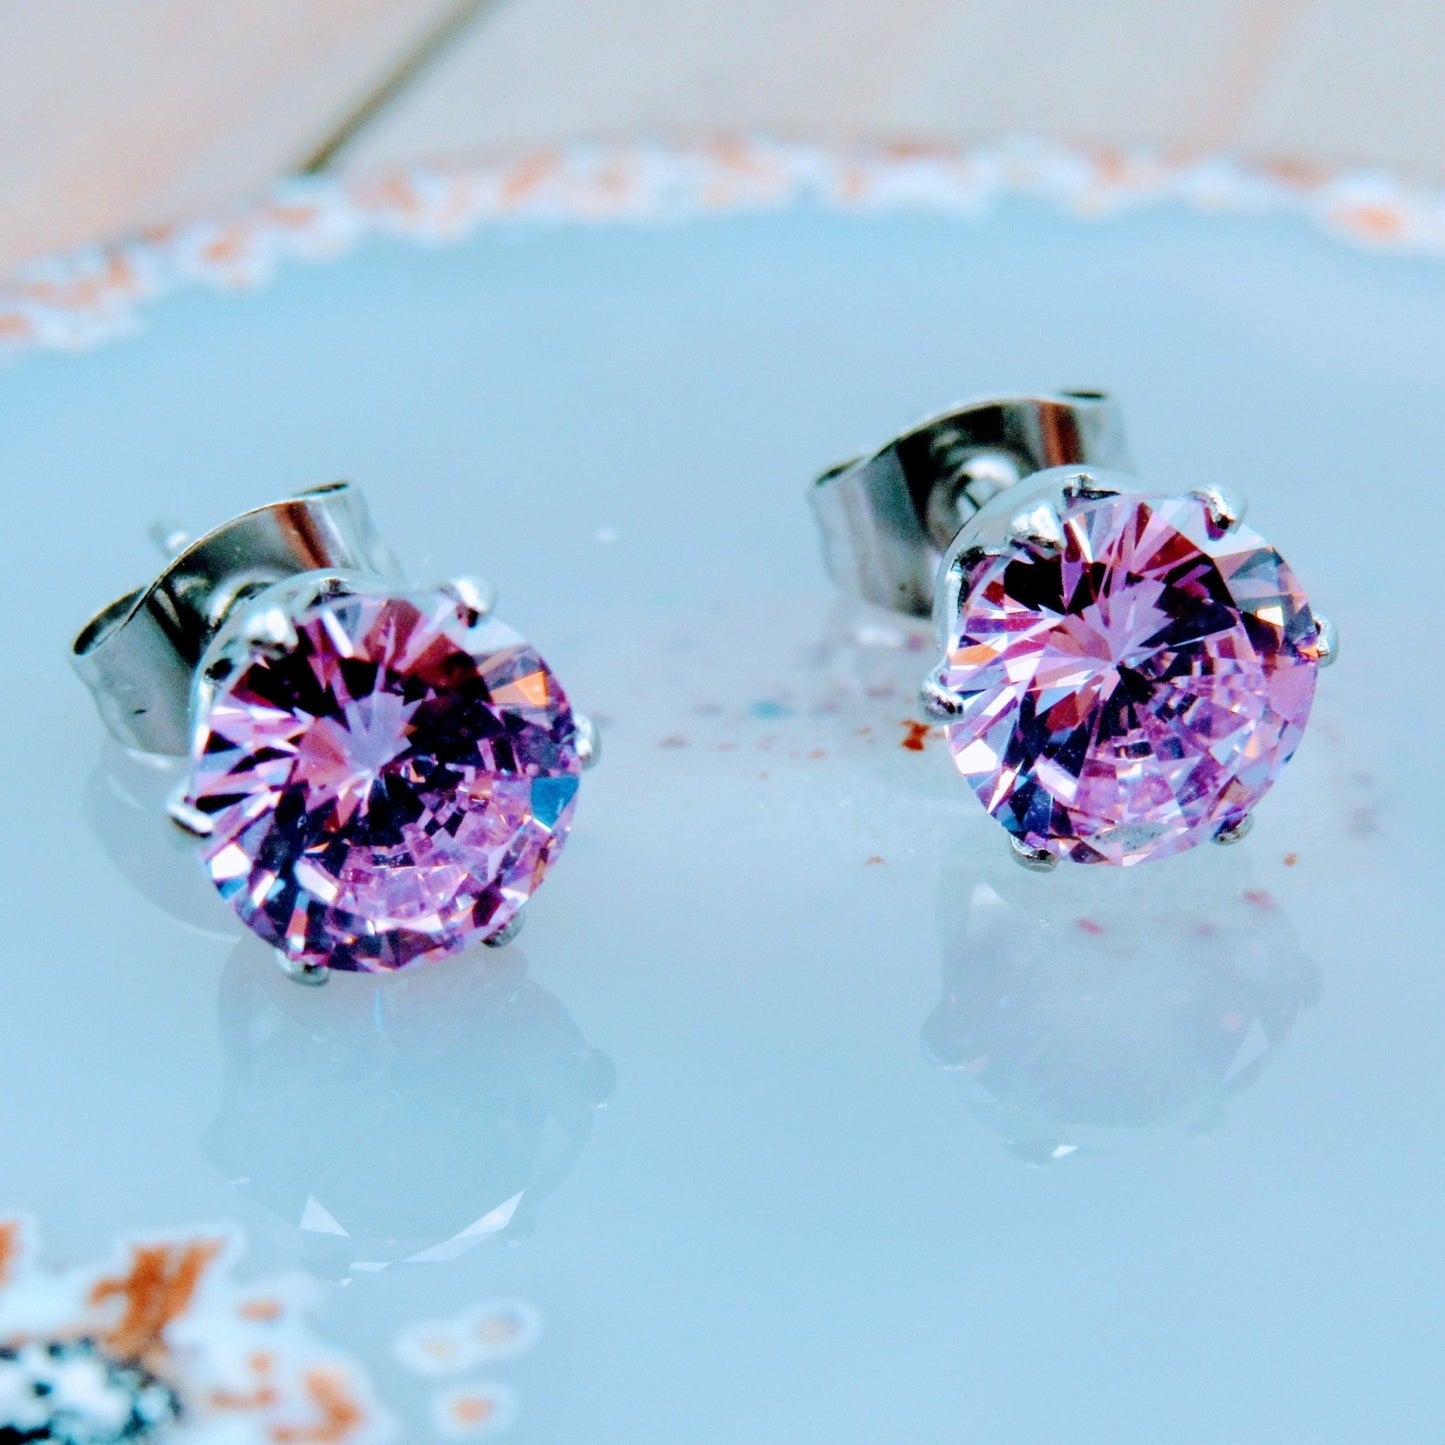 Pink cubic zirconia gemstones 316L stainless steel butterfly back ear piercing stud set 3mm-7mm diameter pick your size - Siren Body Jewelry